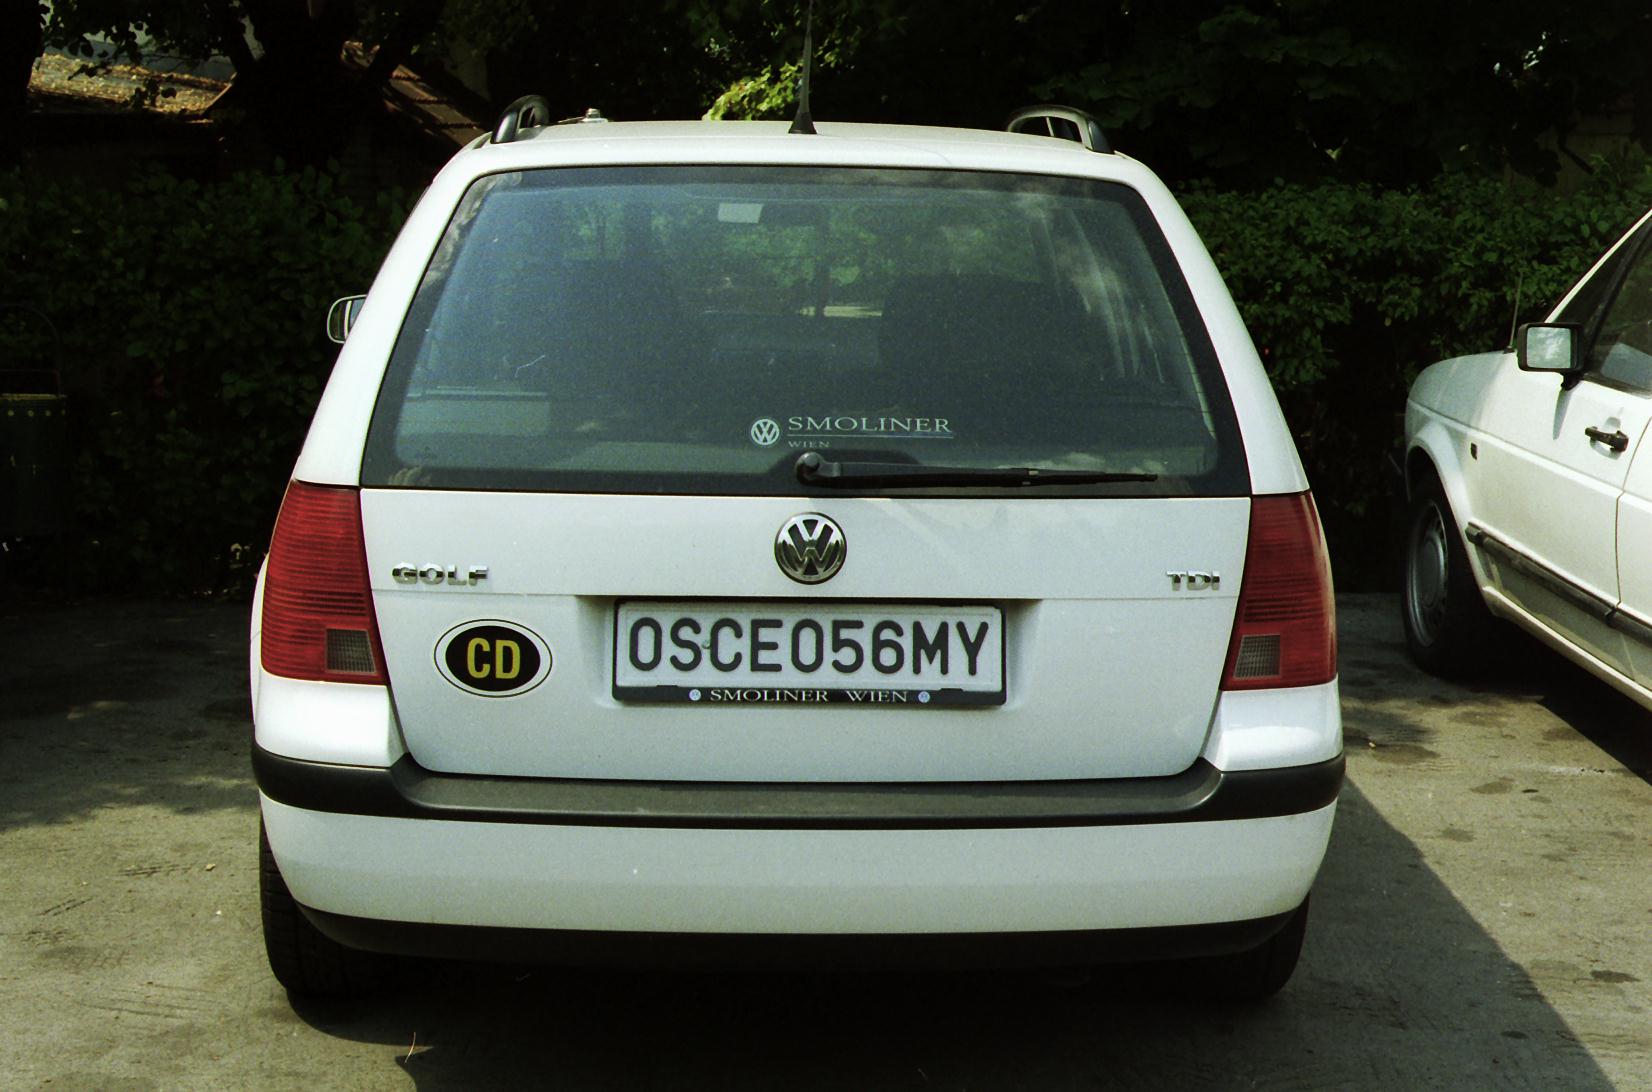 OSCE_in_SRB_2003_Belgrade_056MY_ZP.JPG